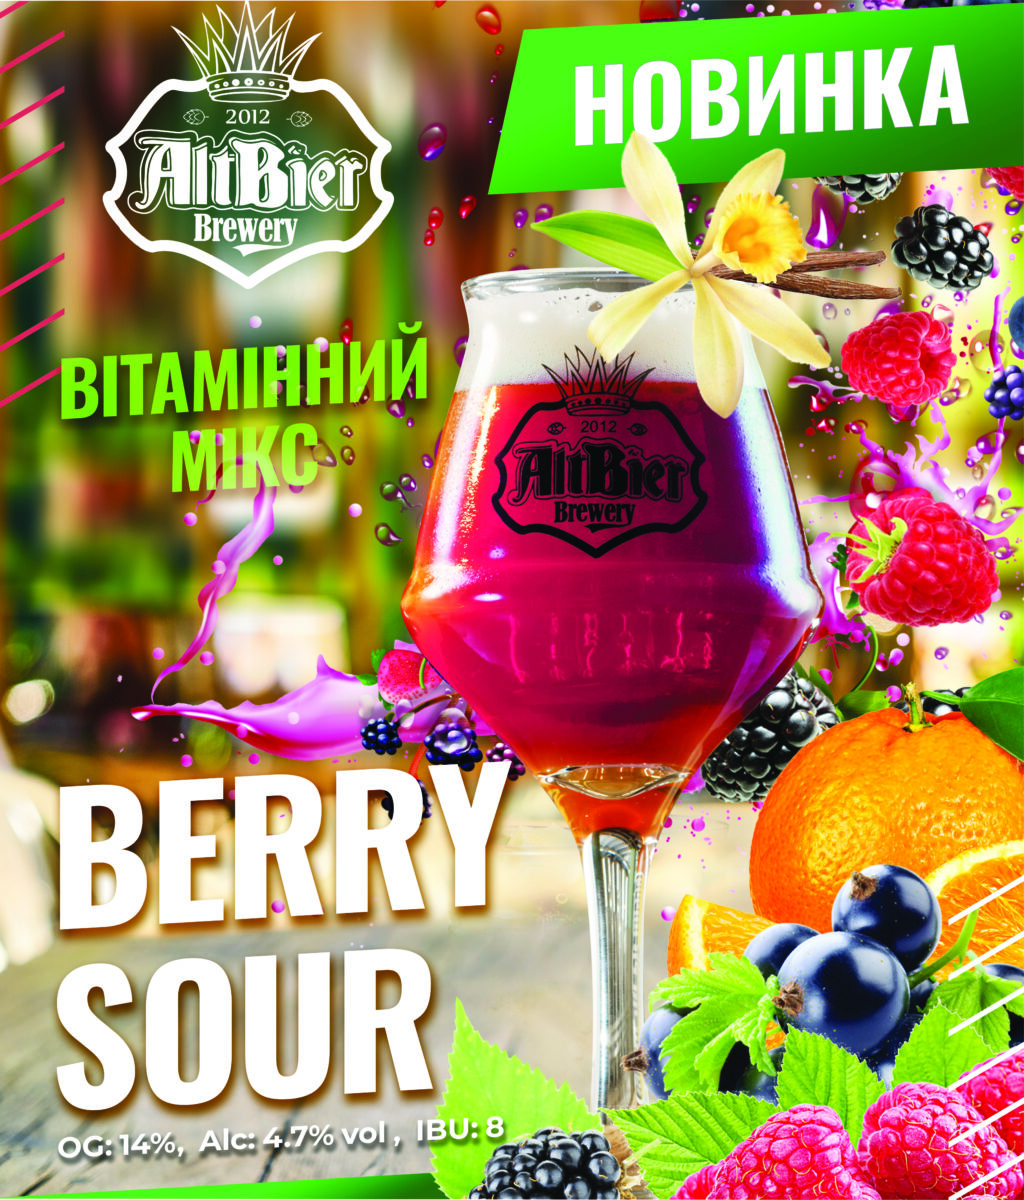 New BERRY Sour • AltBier Brewery Kharkiv